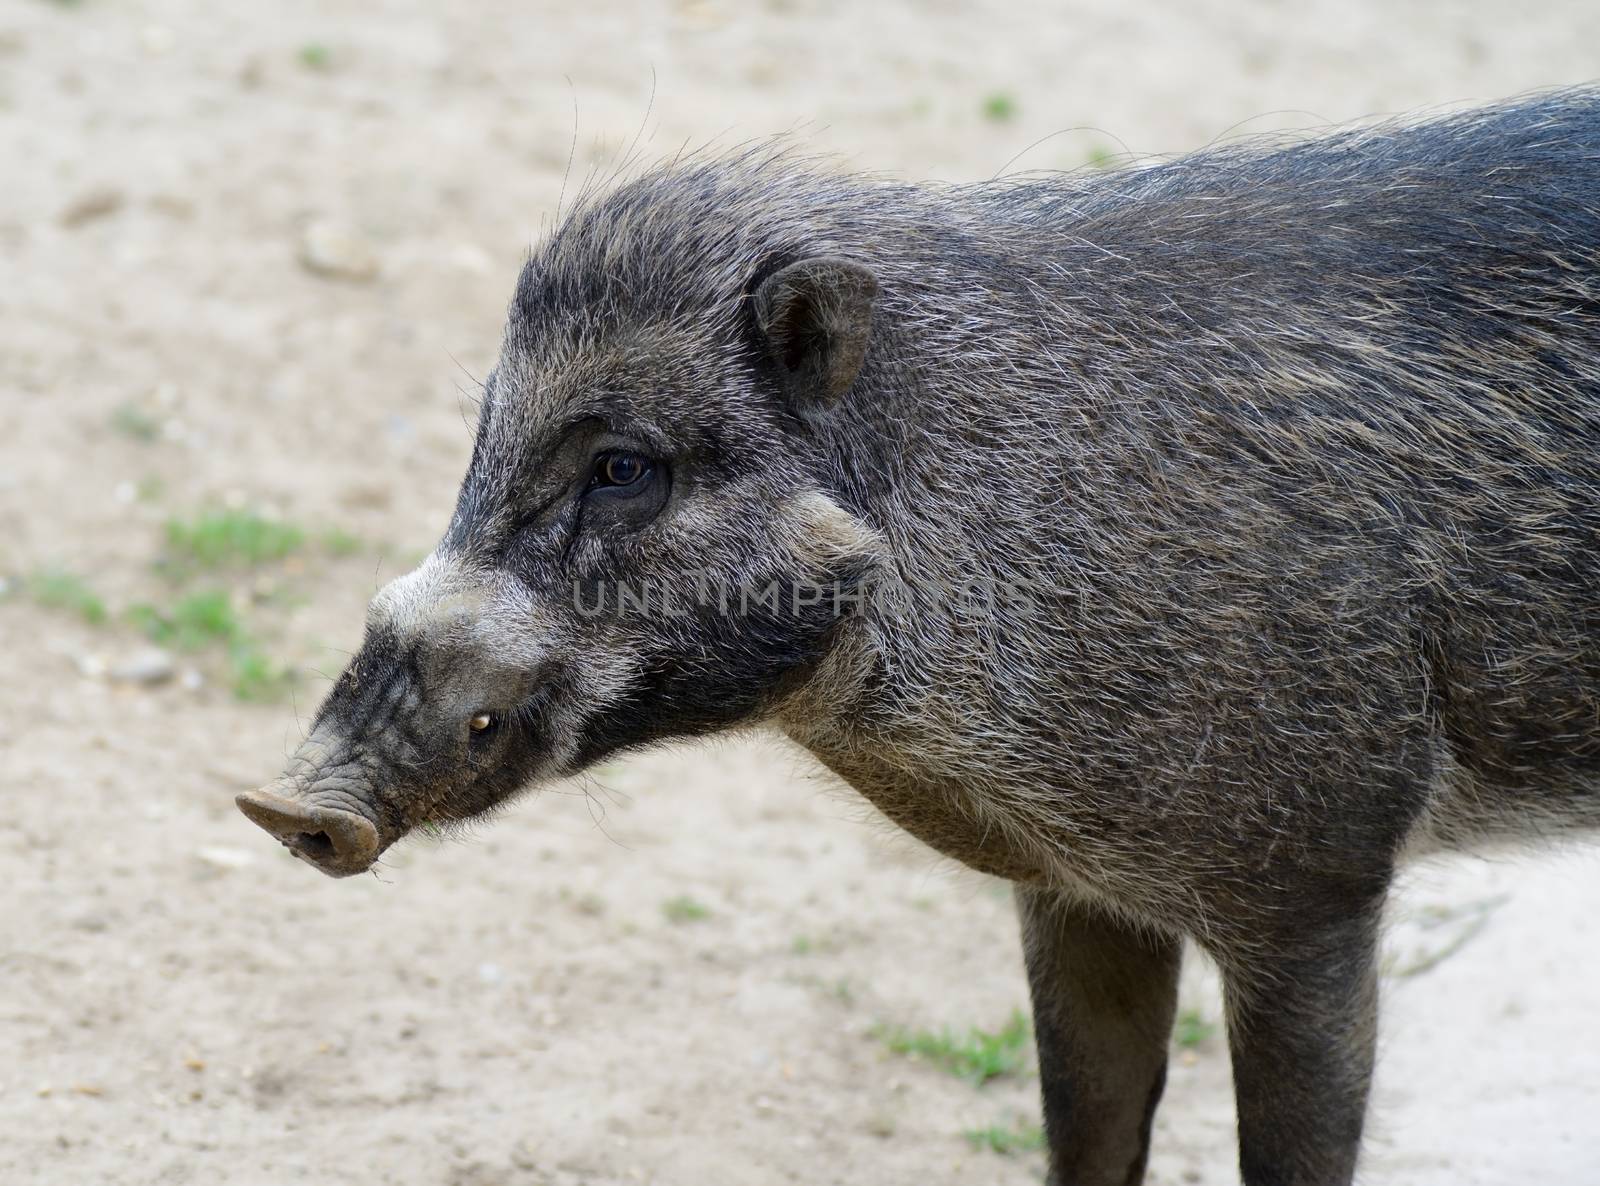 Visayan warty pig closeup profile showing fur deatail and tusk